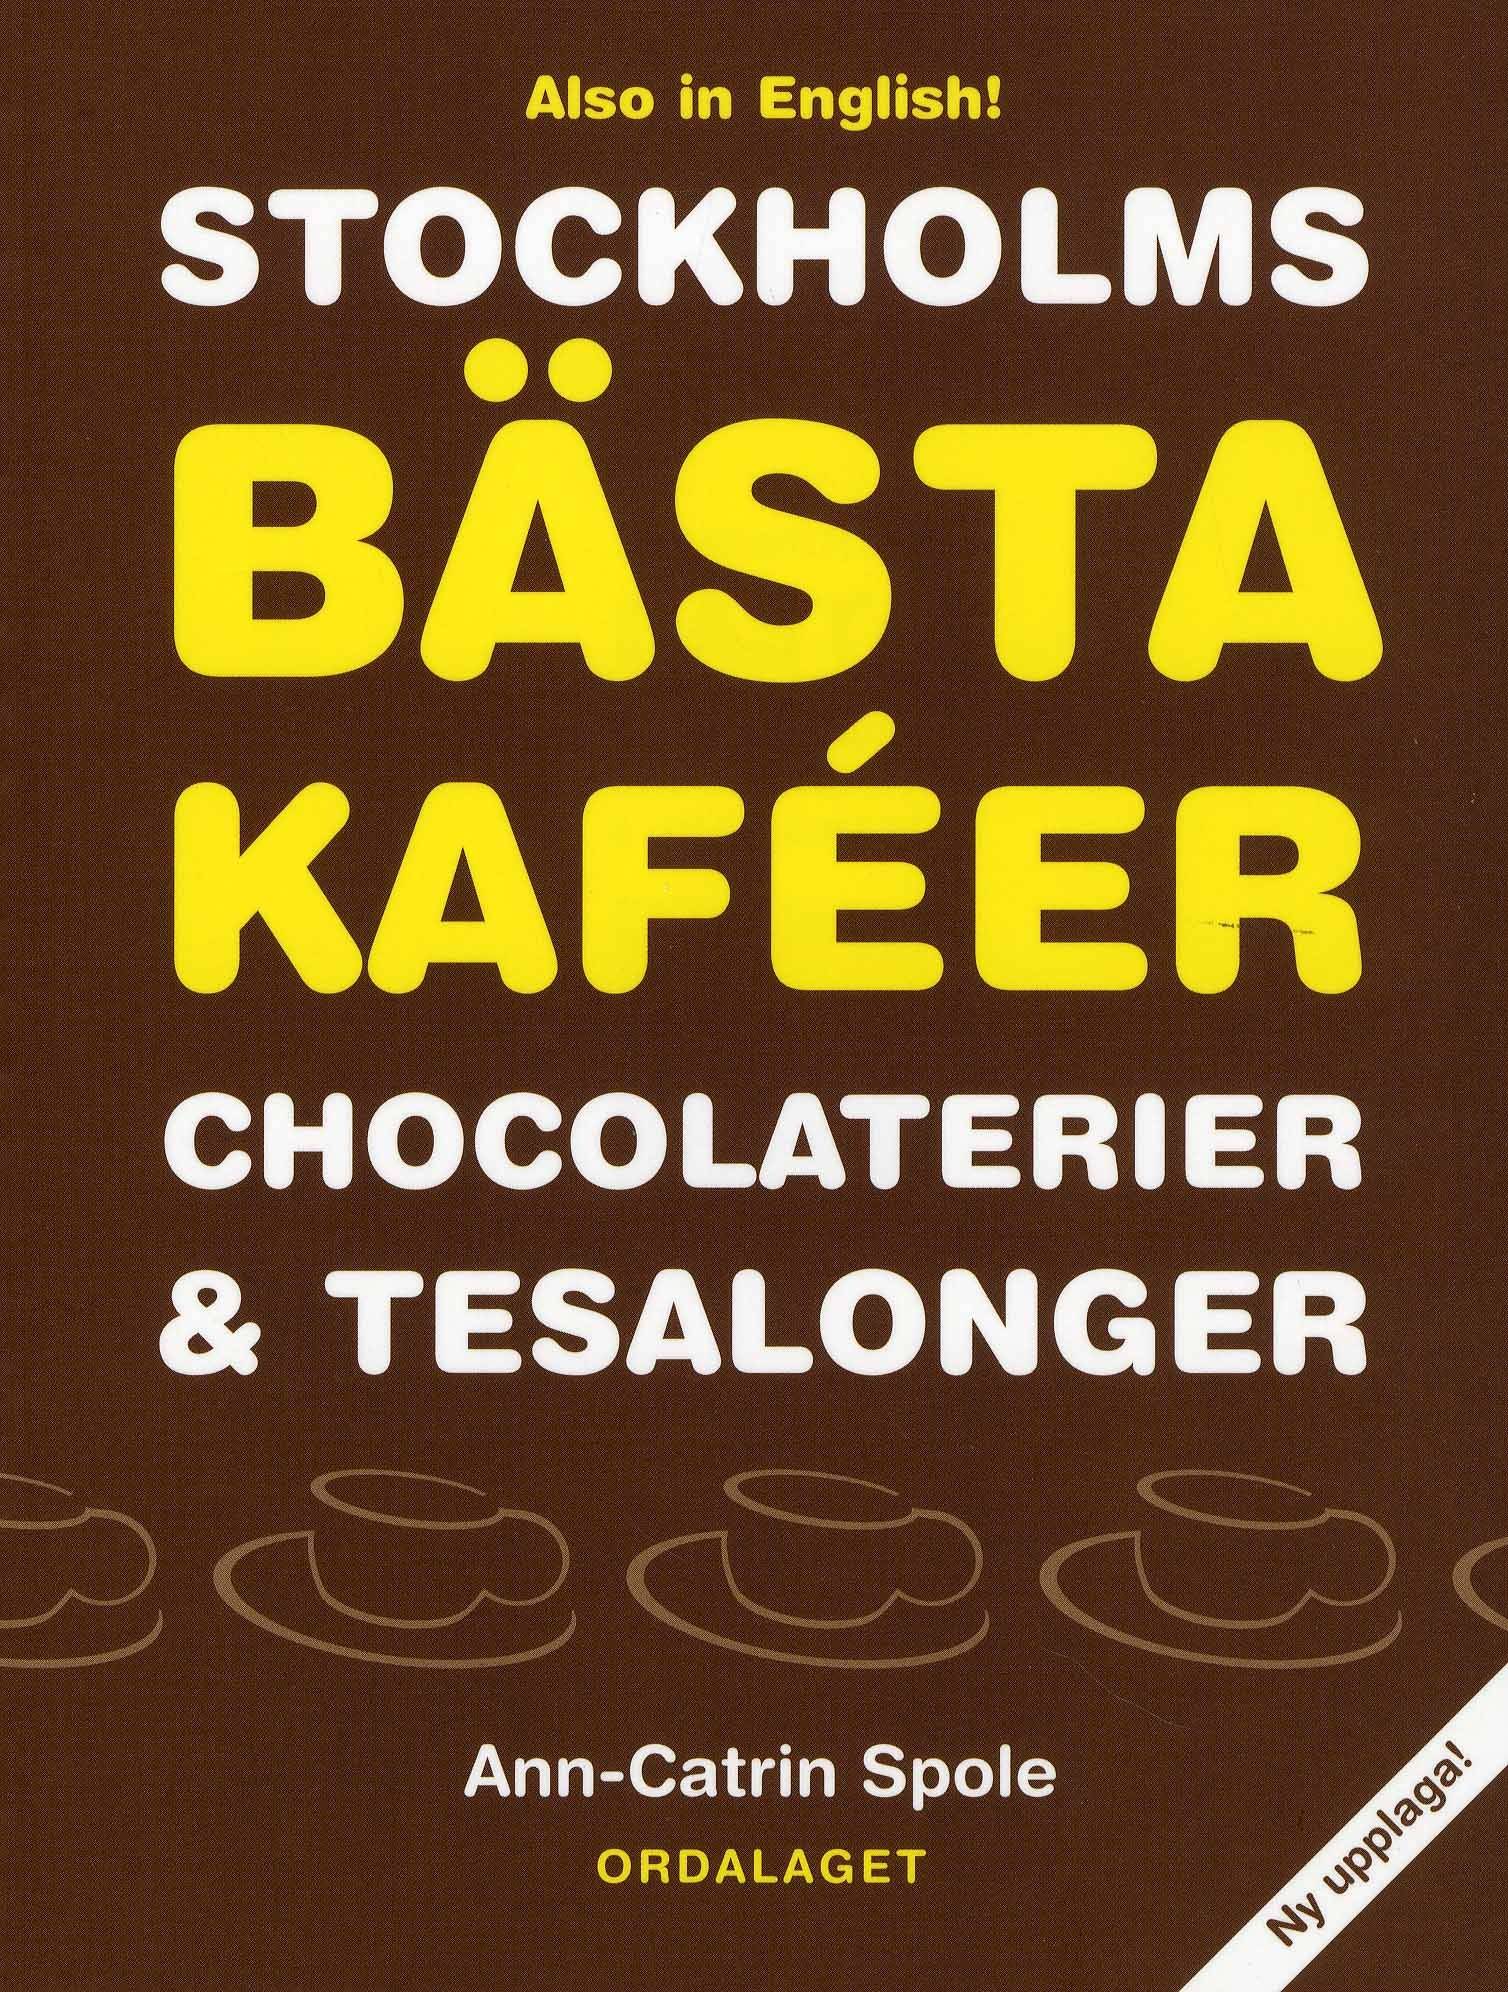 Stockholms bästa kaféer chocolaterier & tesalonger / The best cafés, chocolateries and teahouses in Stockholm